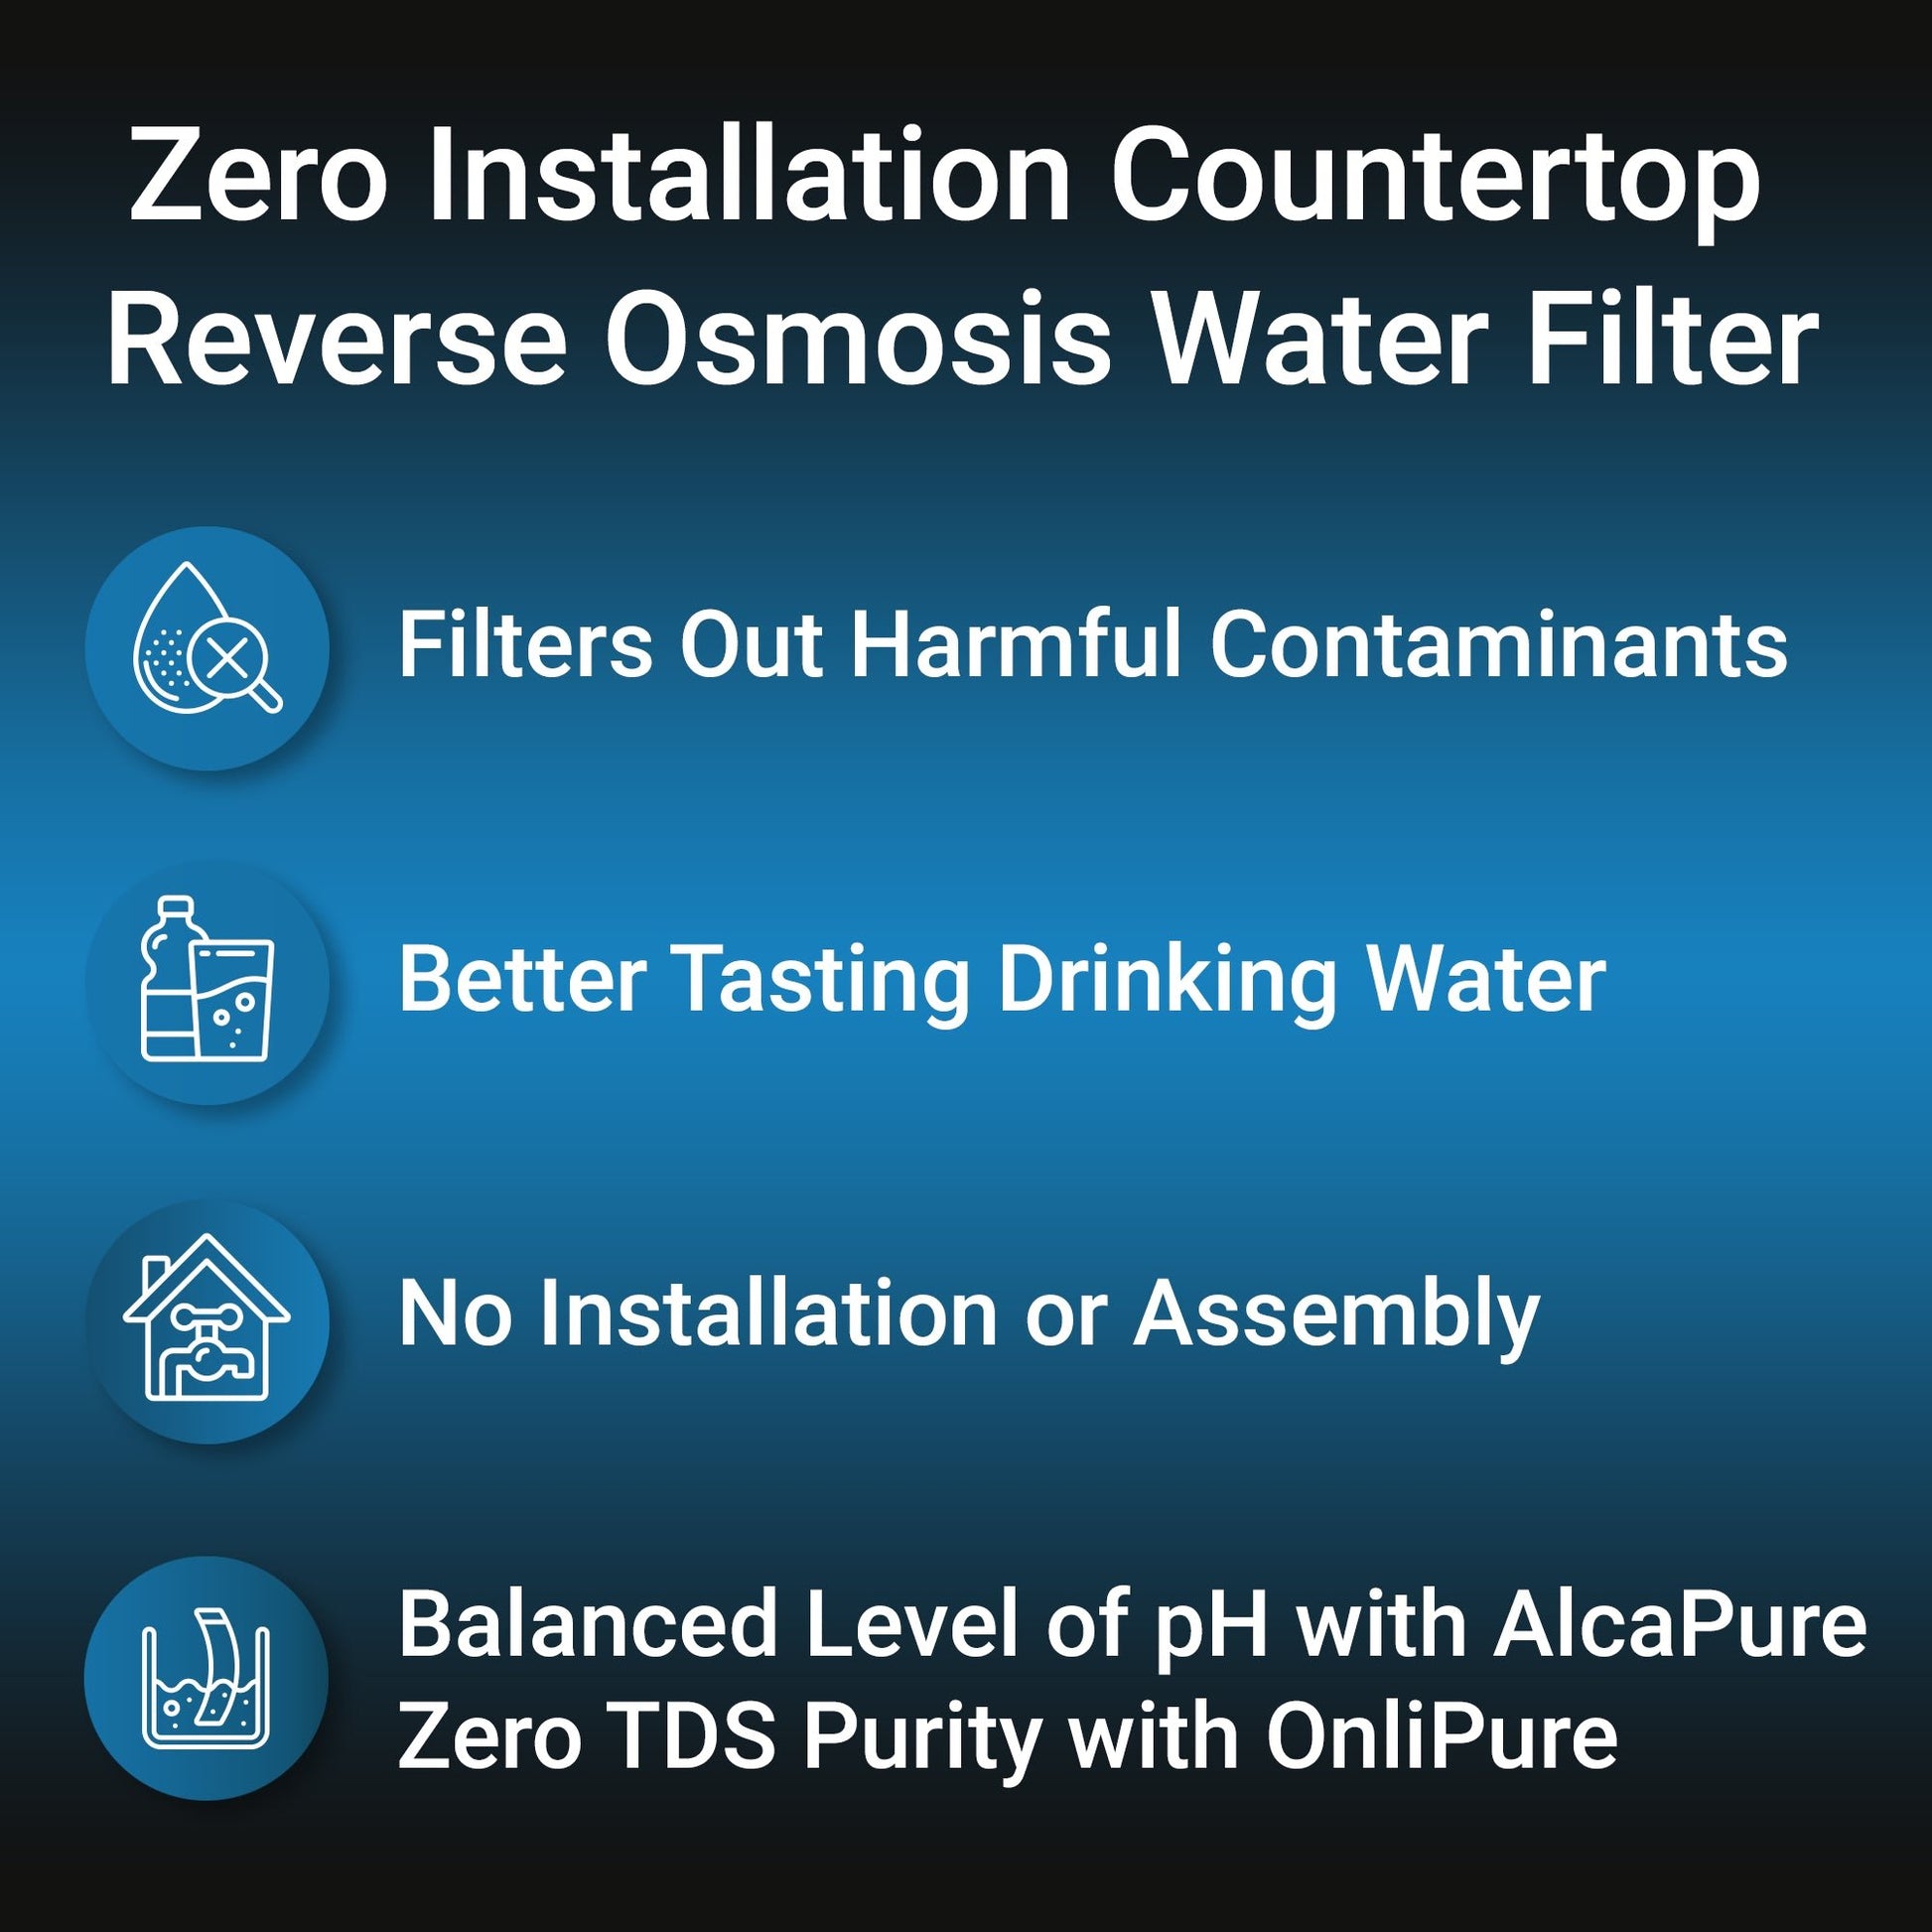 Zero Installation Purifier Countertop Reverse Osmosis Water Filter - RKIN